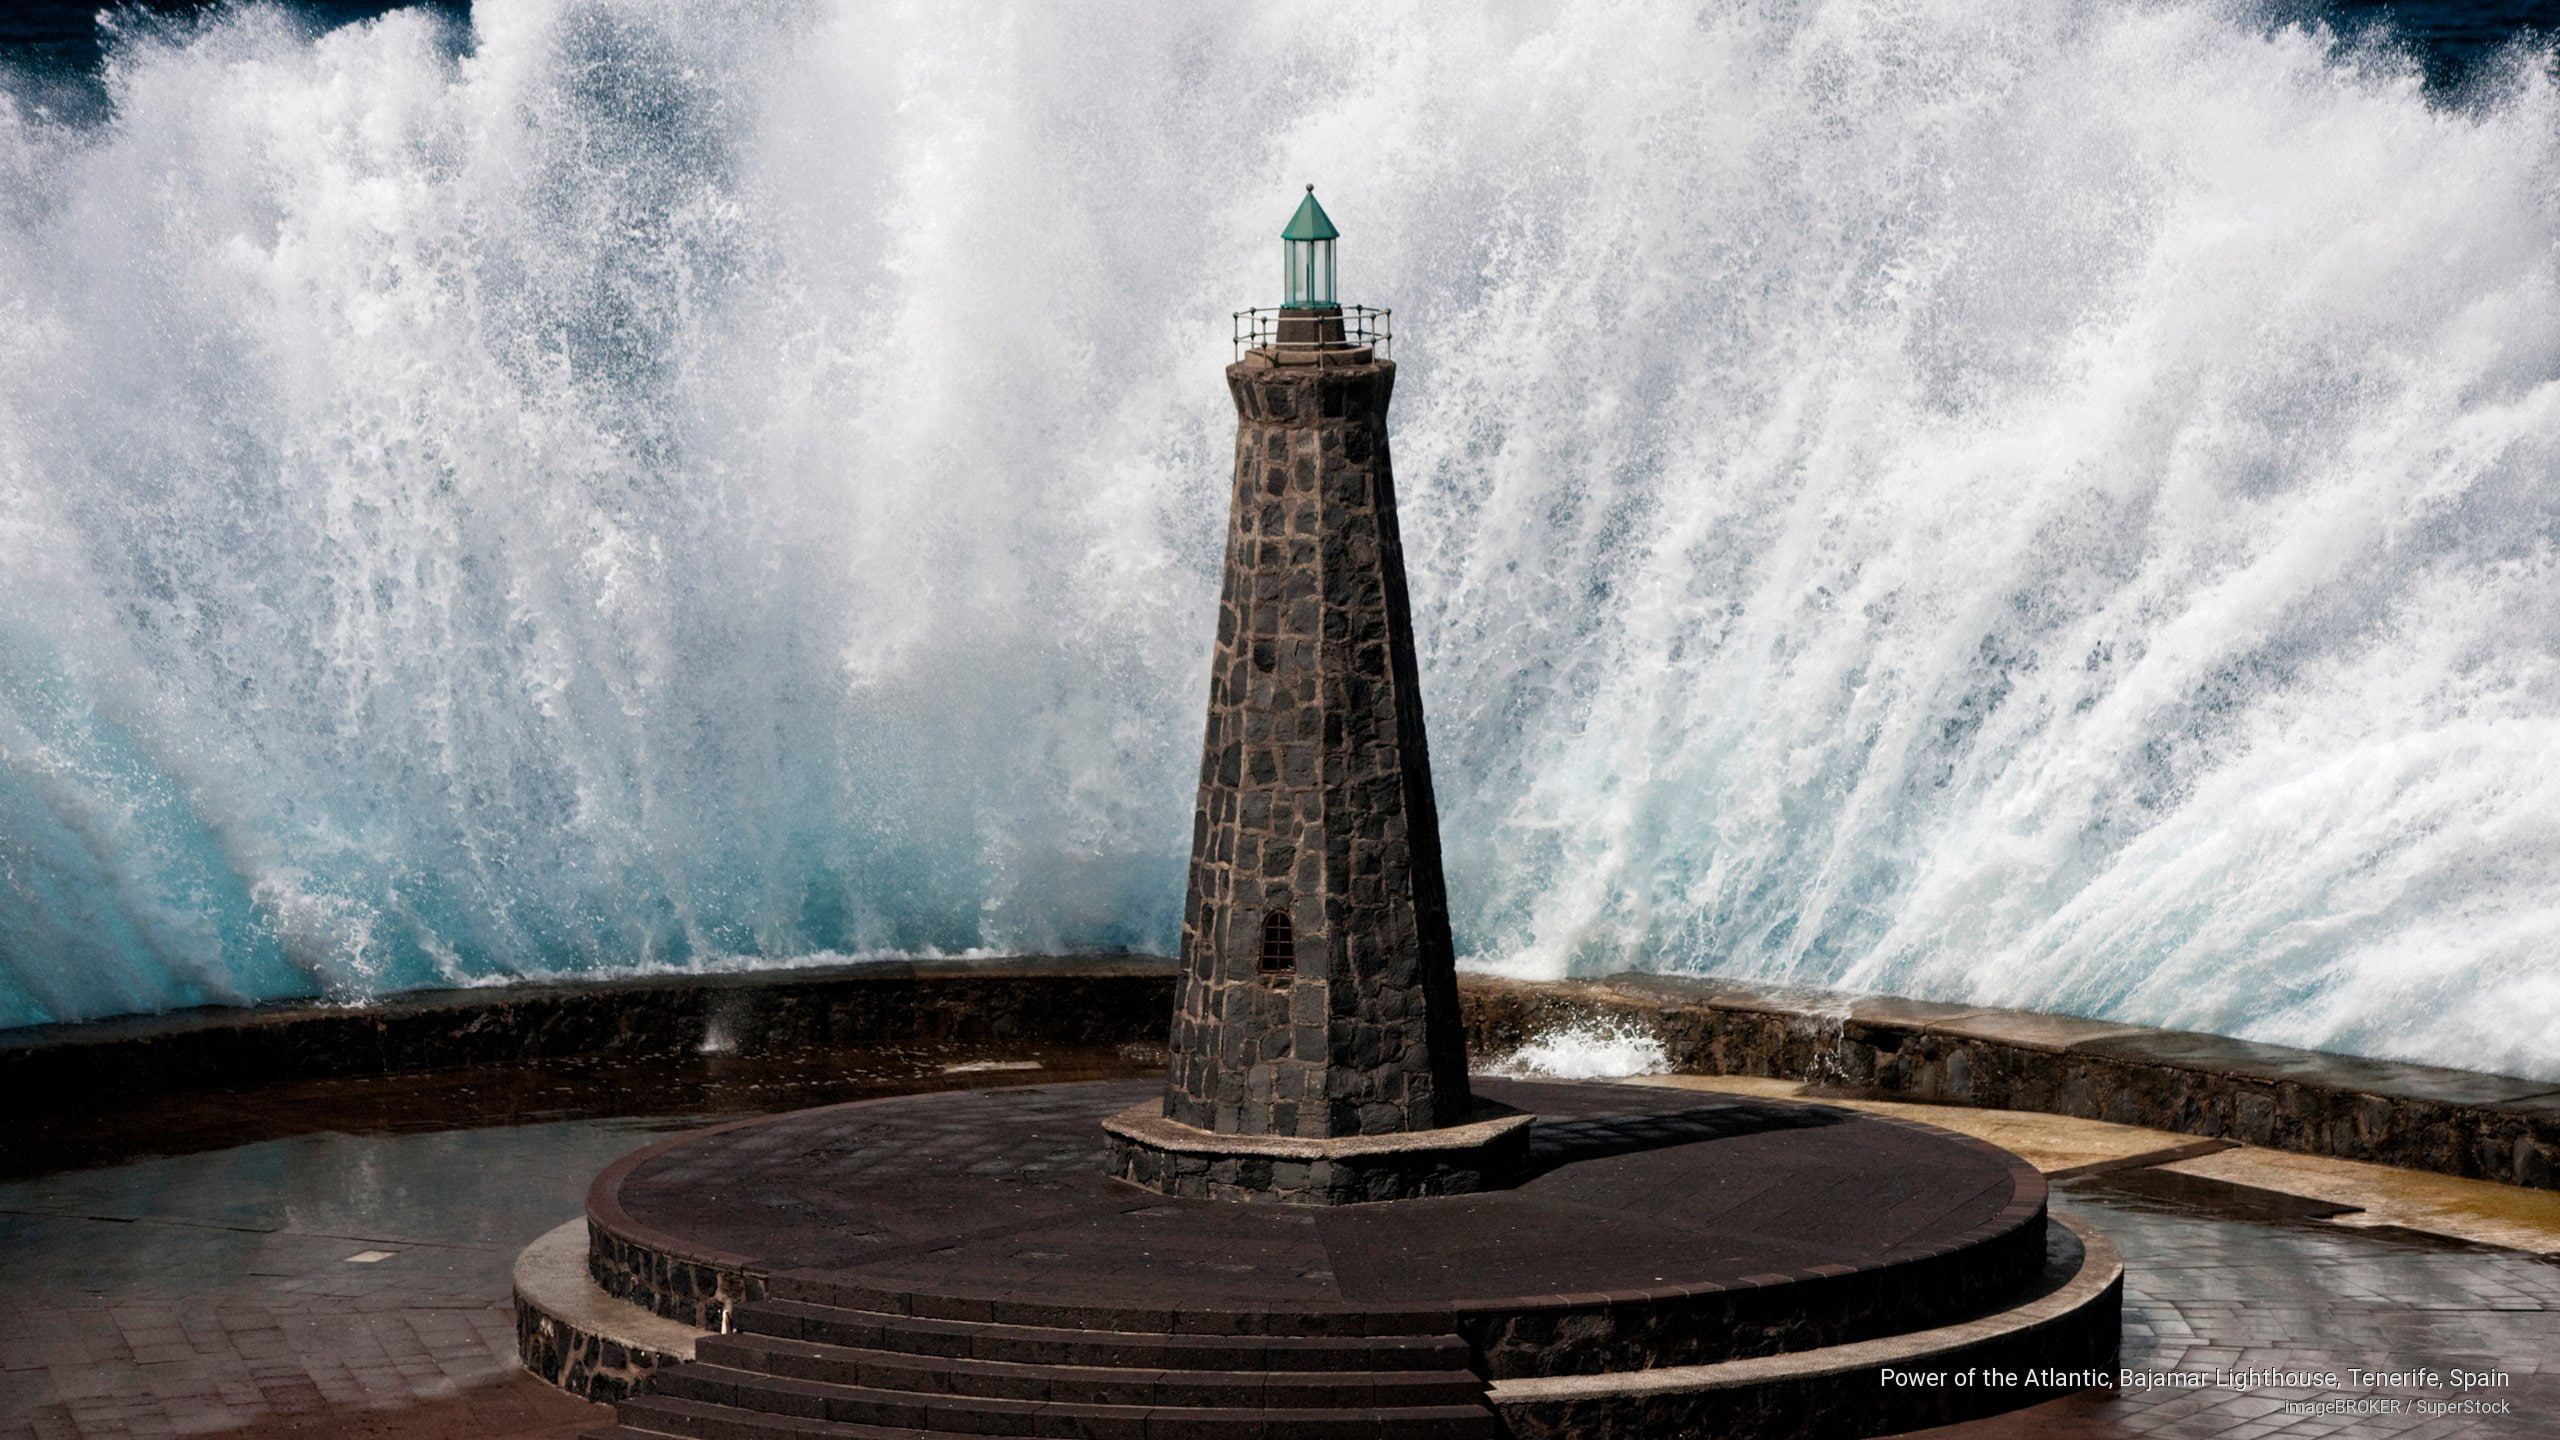 Power of the Atlantic, Bajamar Lighthouse, Tenerife, Spain, Architecture